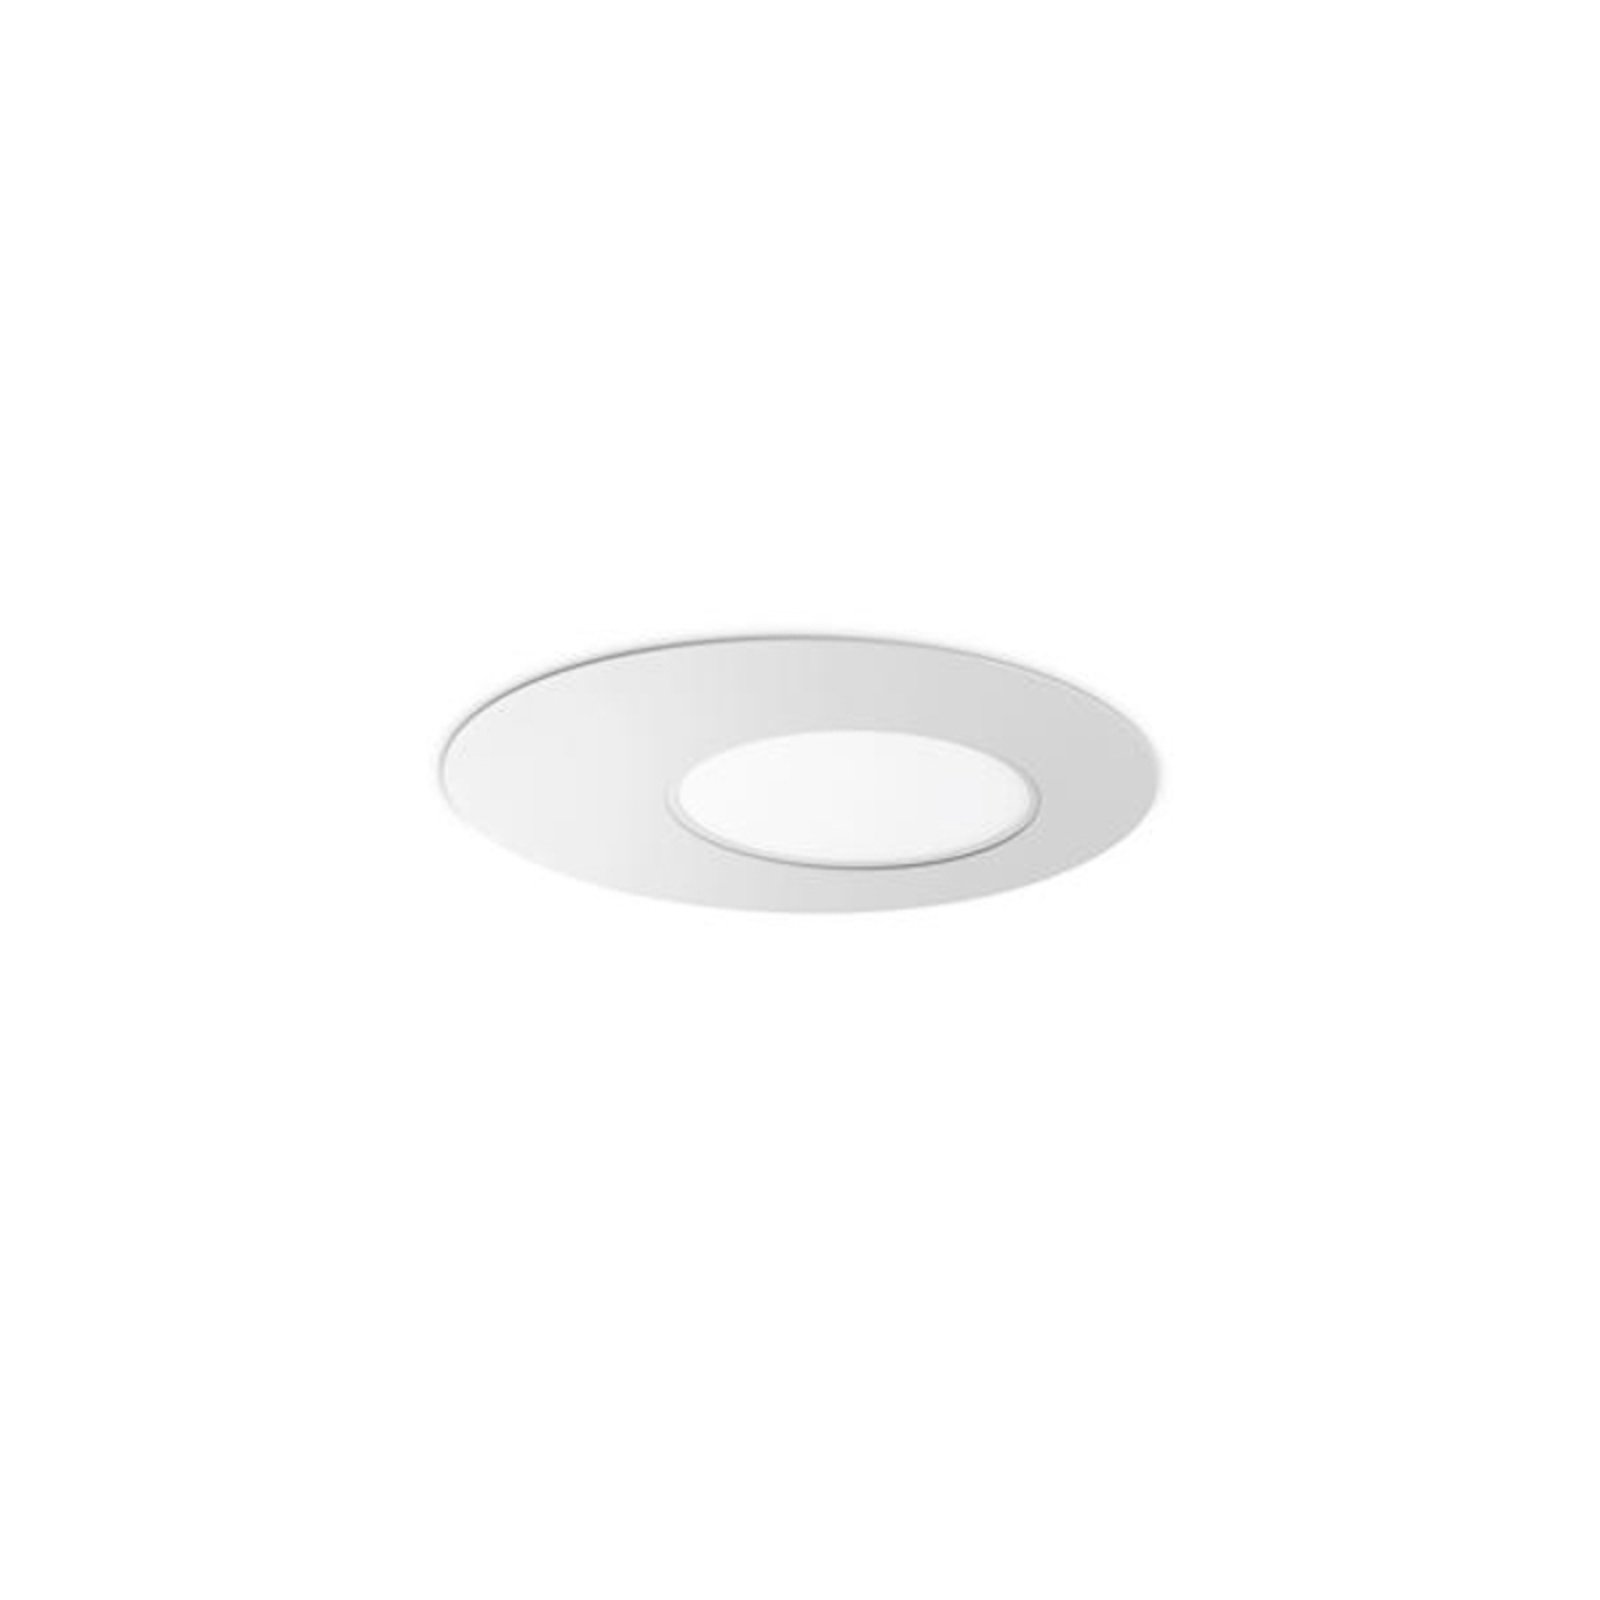 Ideal Lux LED ceiling light Iride, white, Ø 50 cm, metal